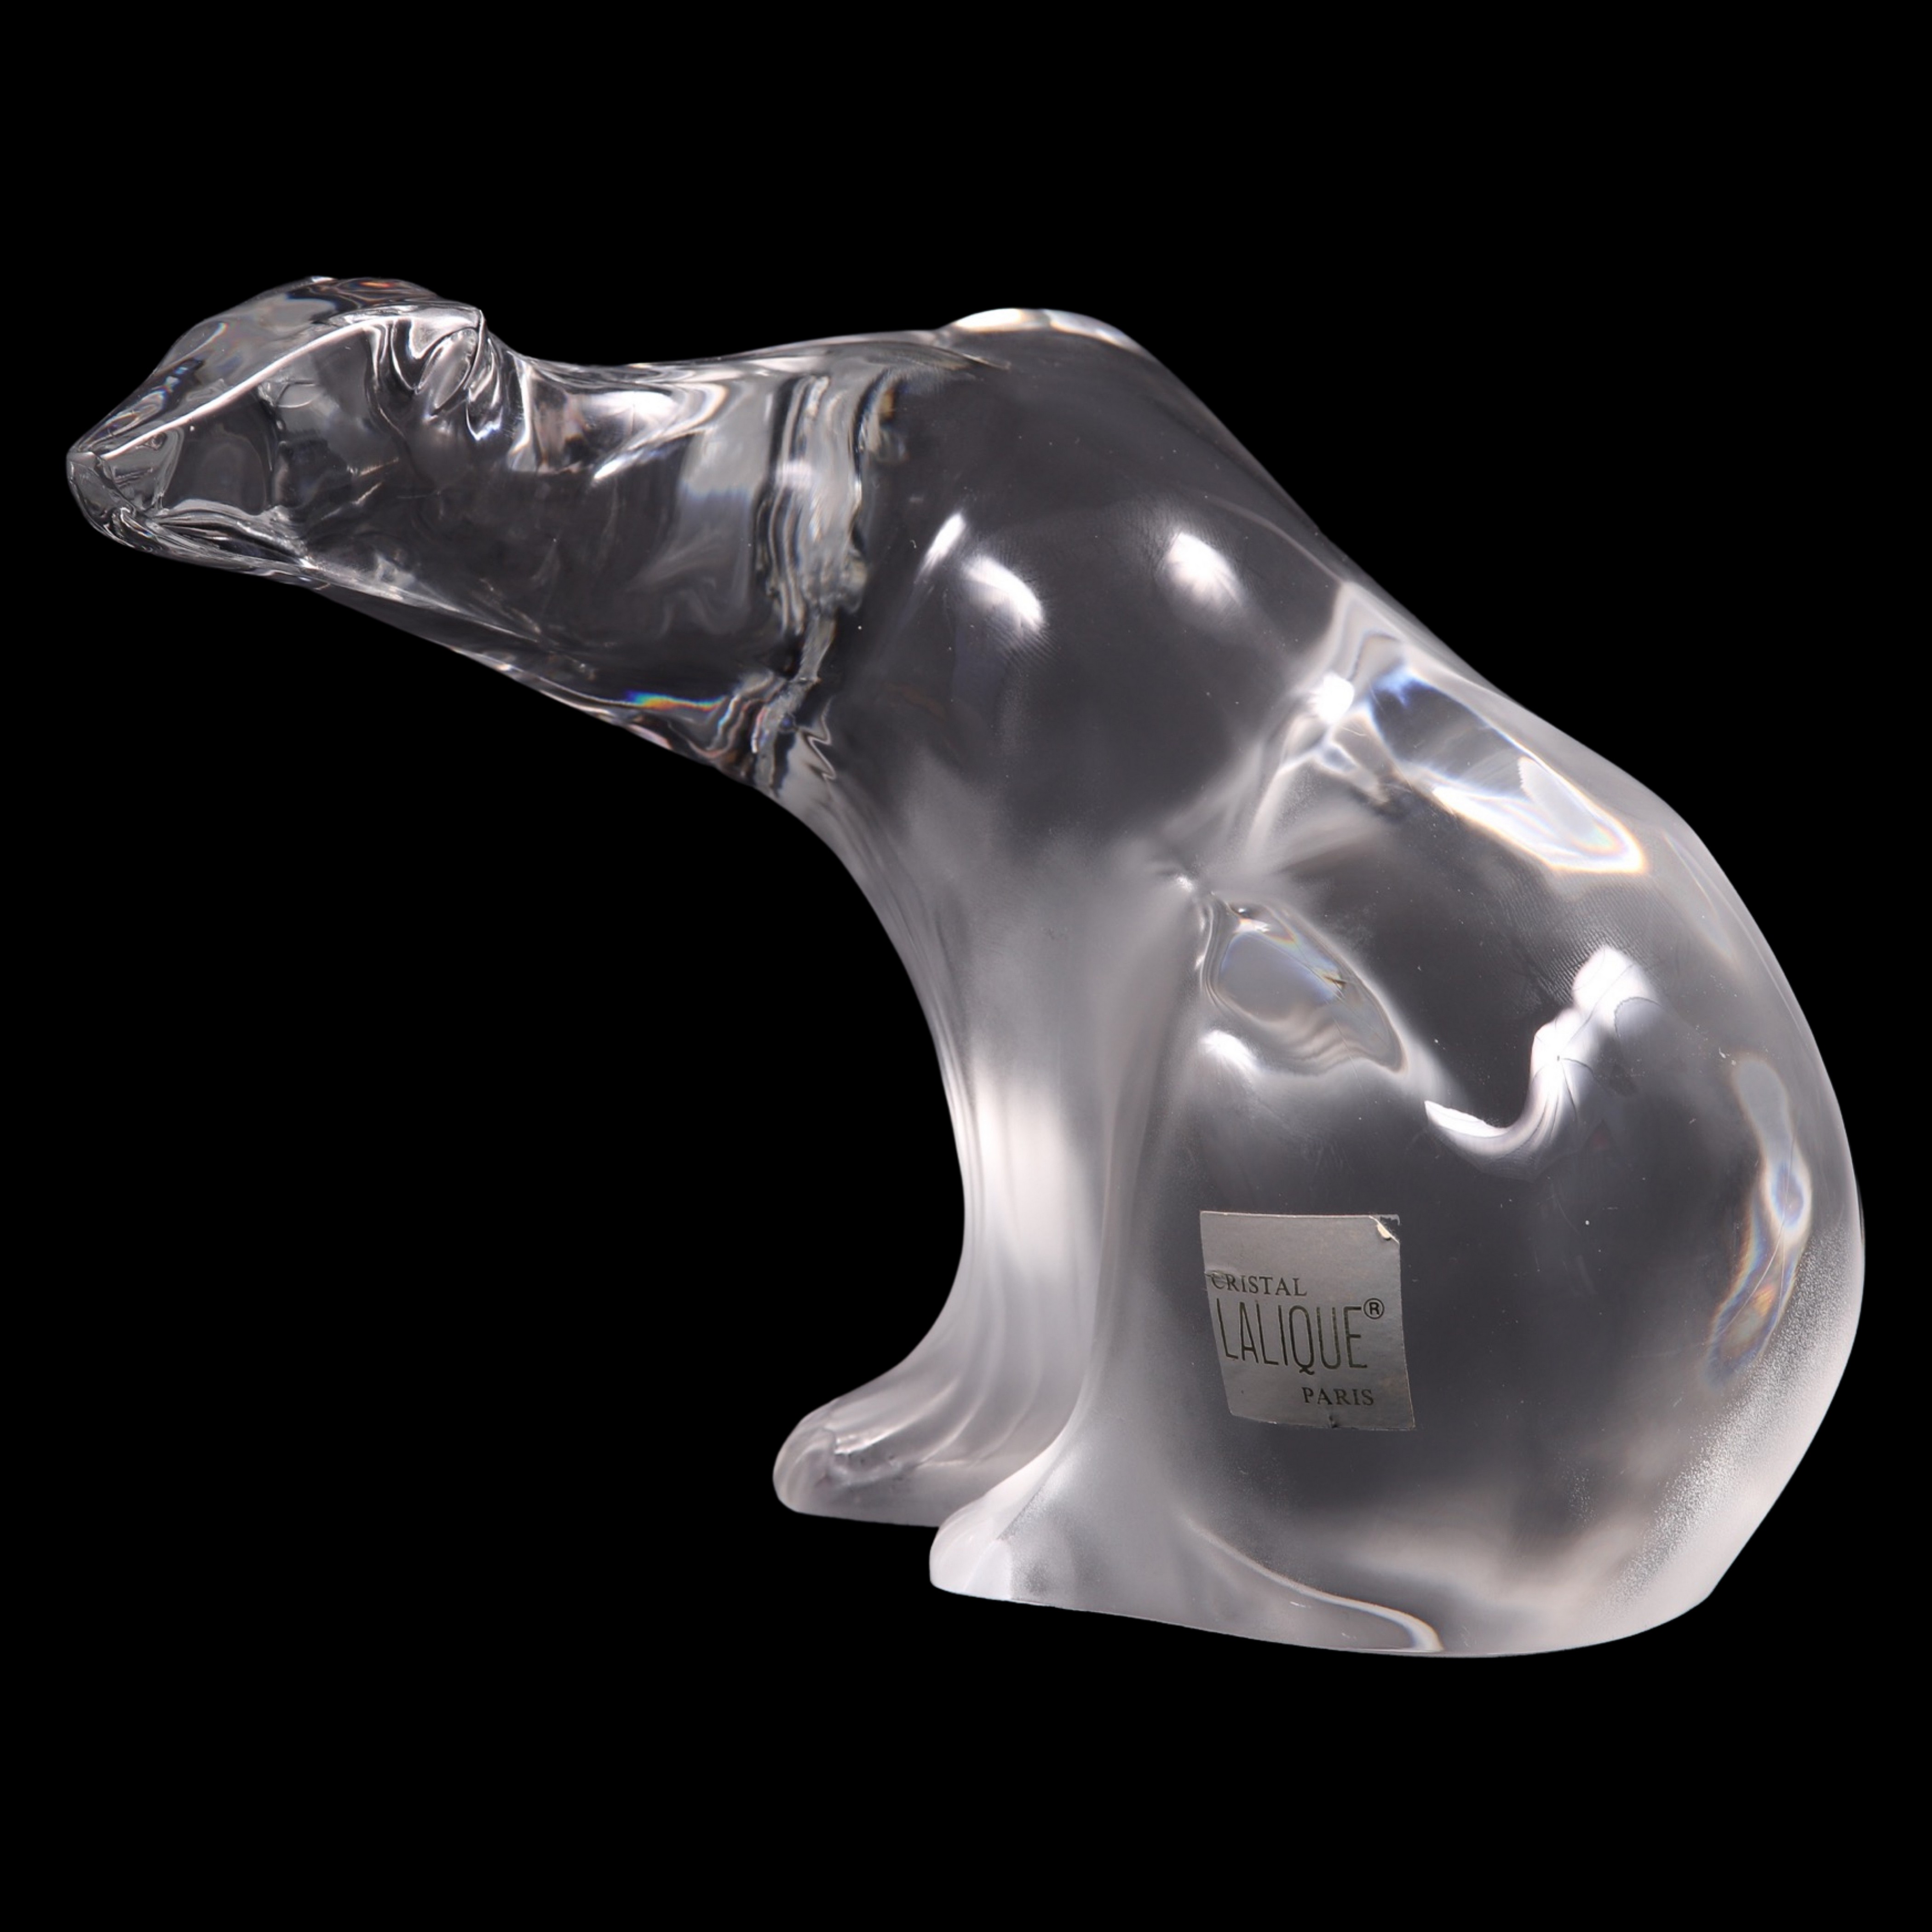 Lalique Ours polar bear crystal 3b462a